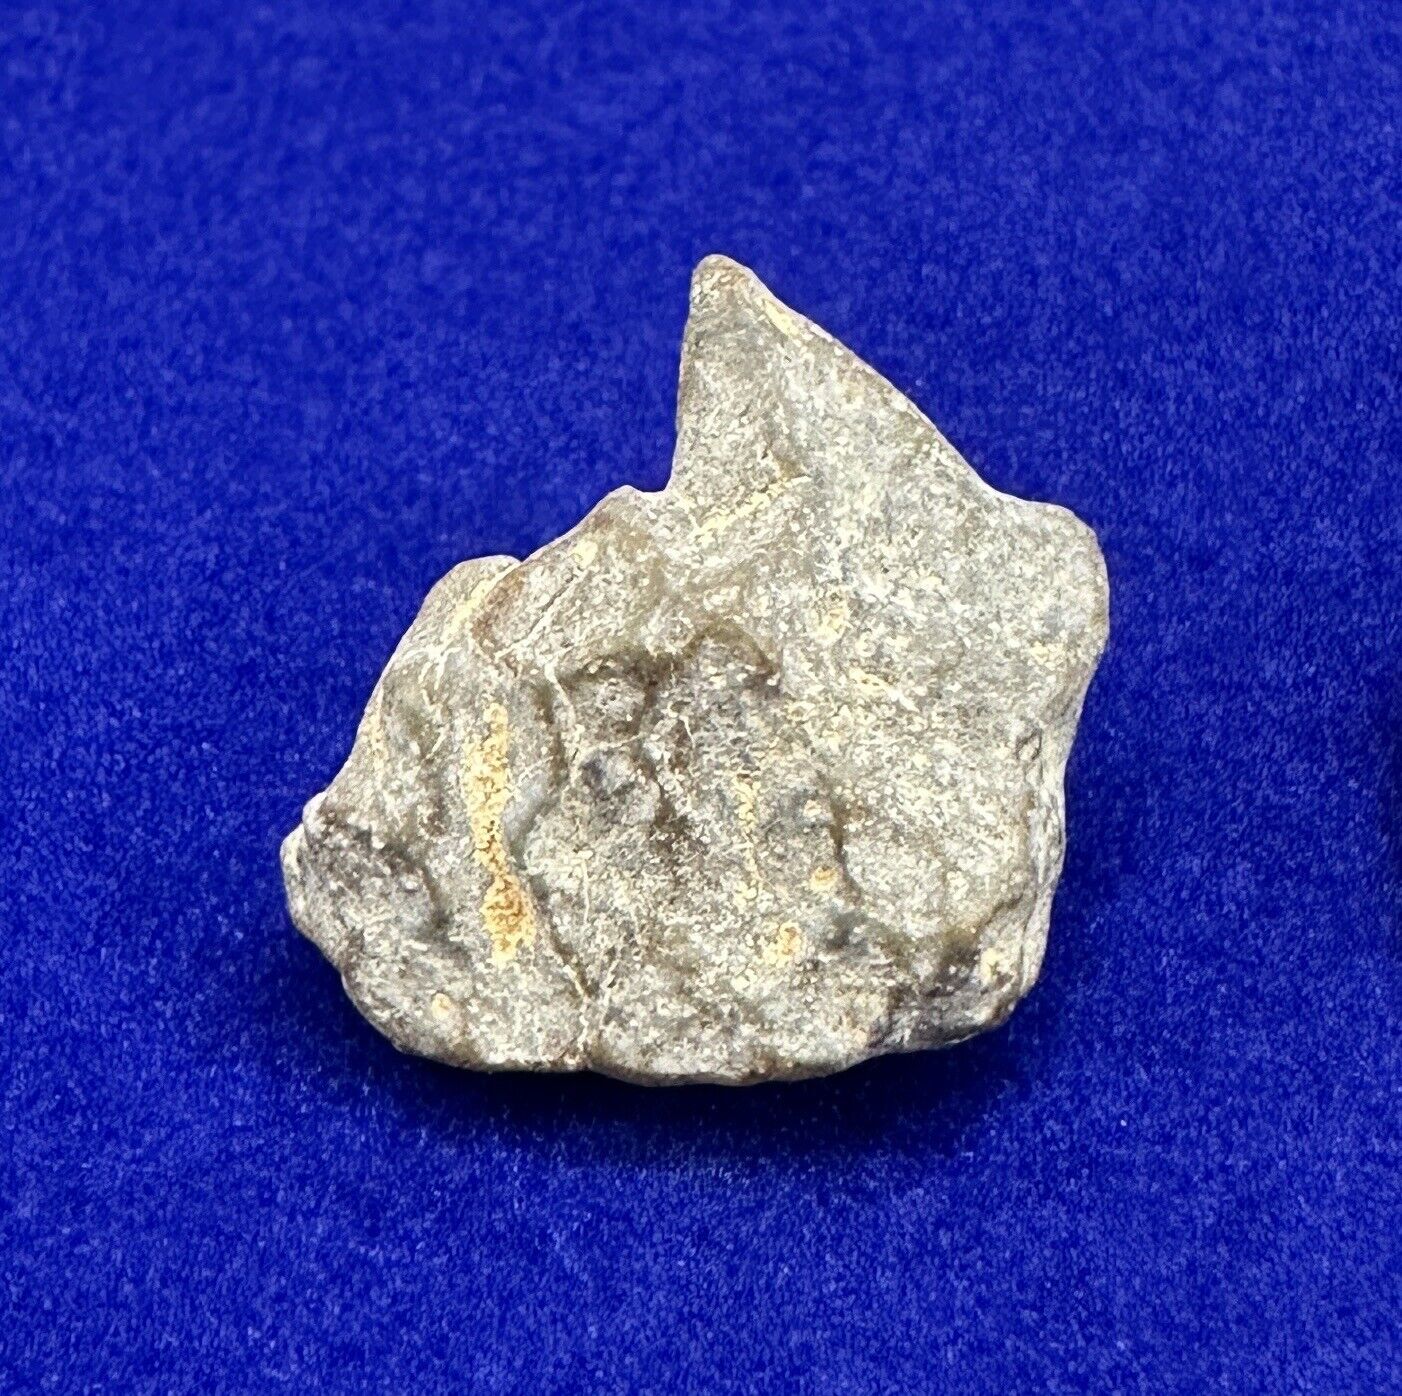 NWA 13974 Moon/Lunar Meteorite, Feldspathic Breccia, Recent Find, 3.62 grams